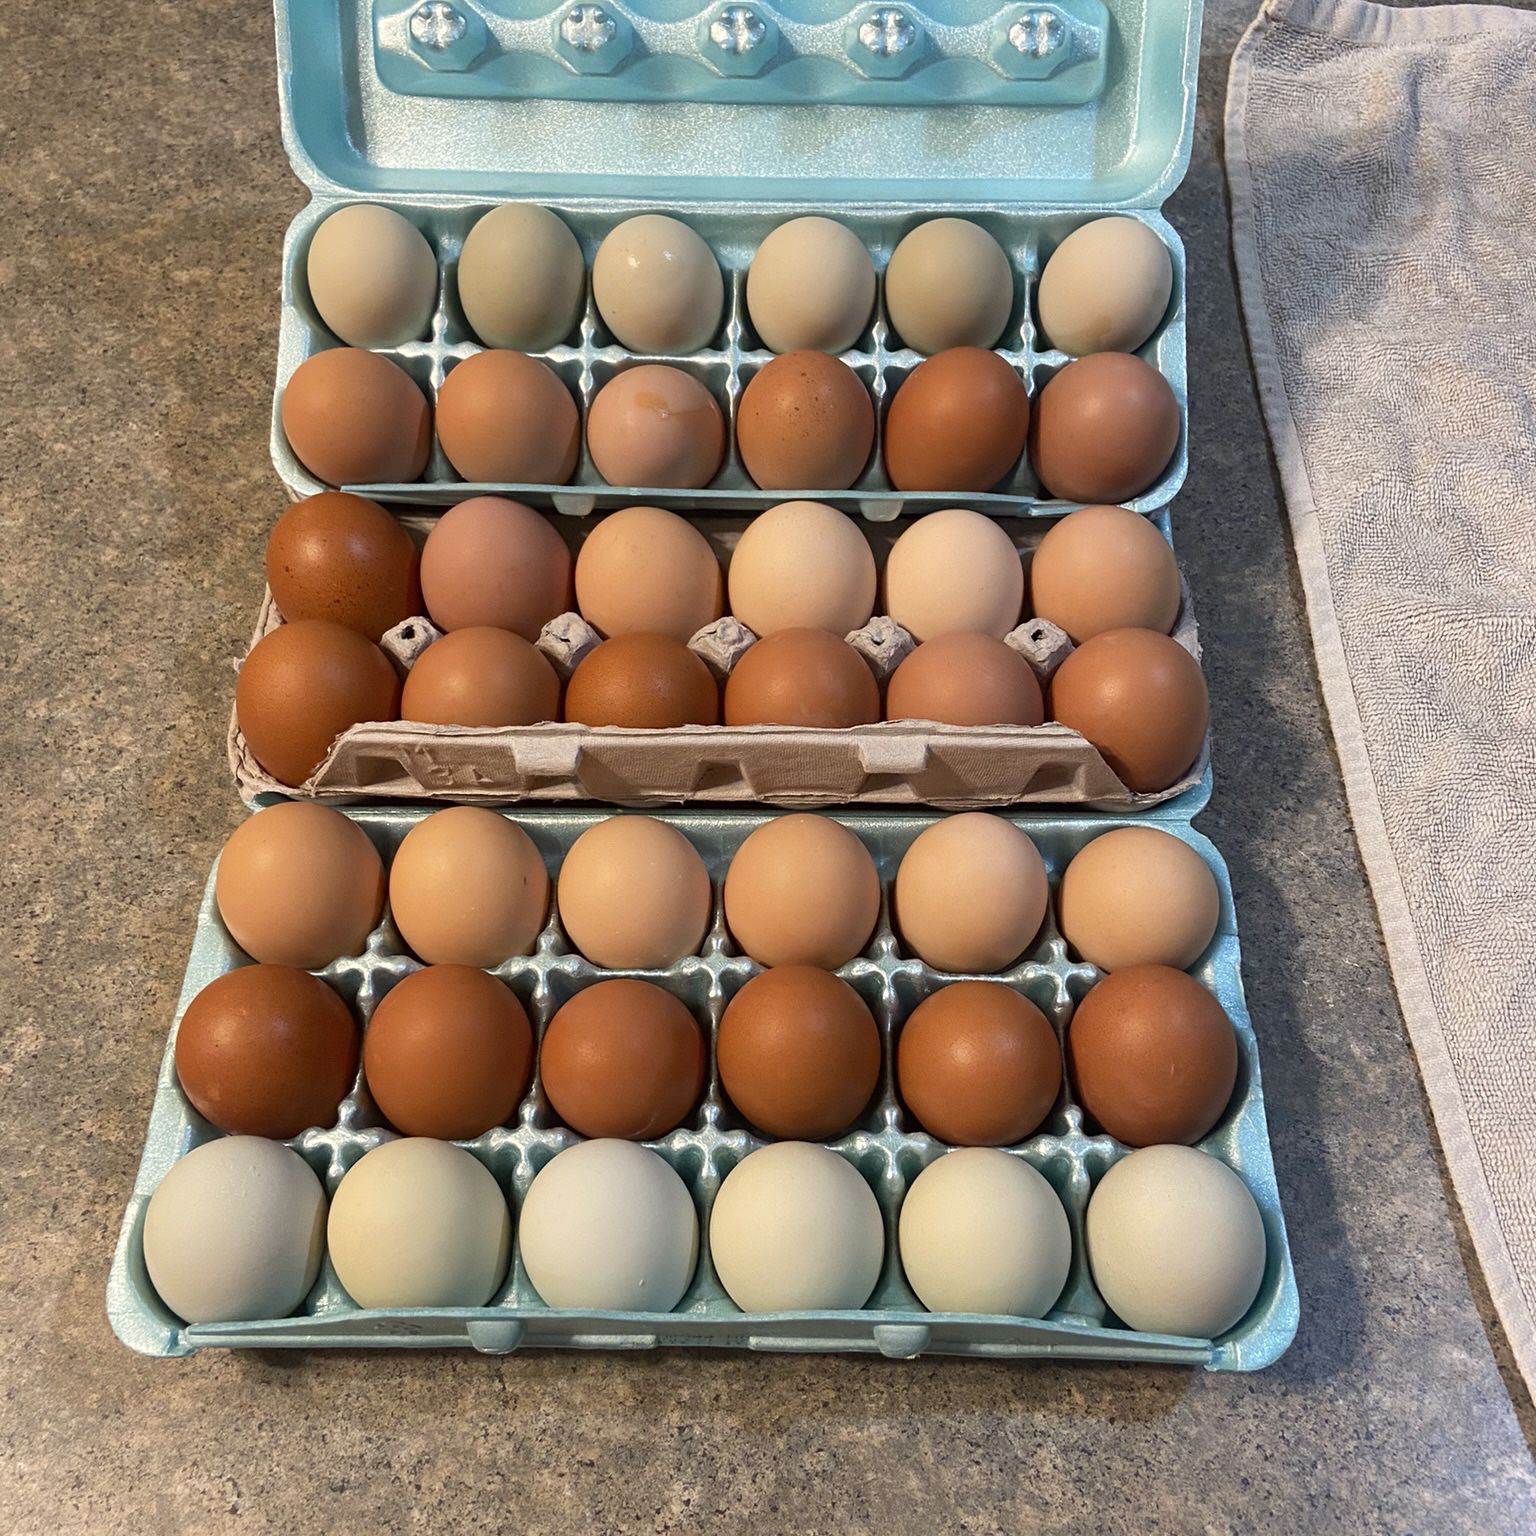 Farm Fresh Non GMO Free Range eggs. $4.00 for 18 $3:00 for 12